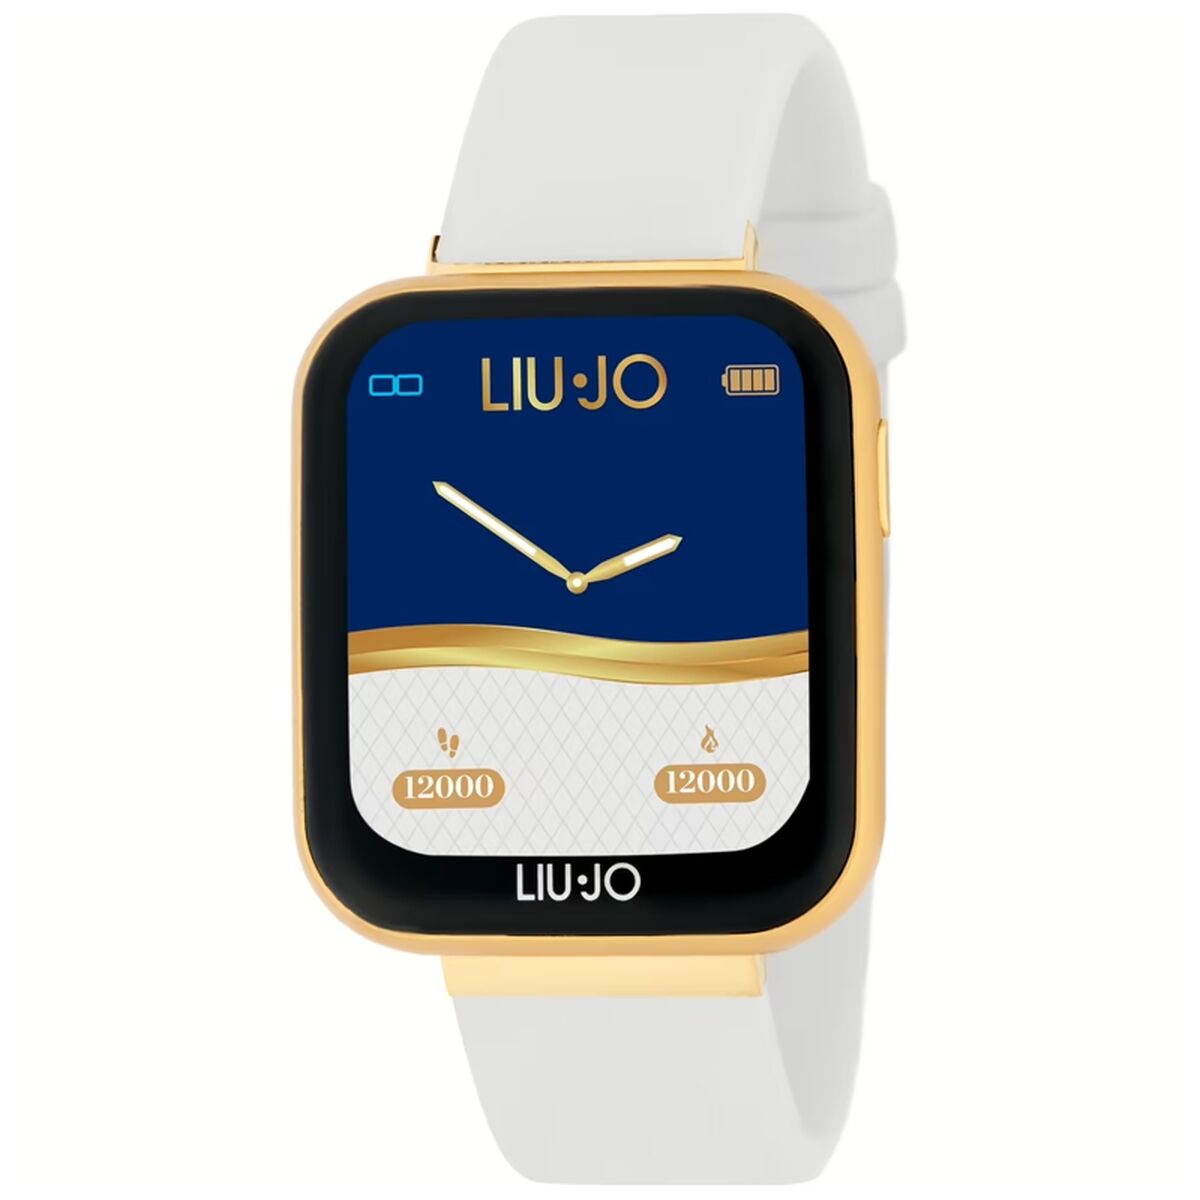 Smartwatch LIU JO SWLJ109 - CA International 